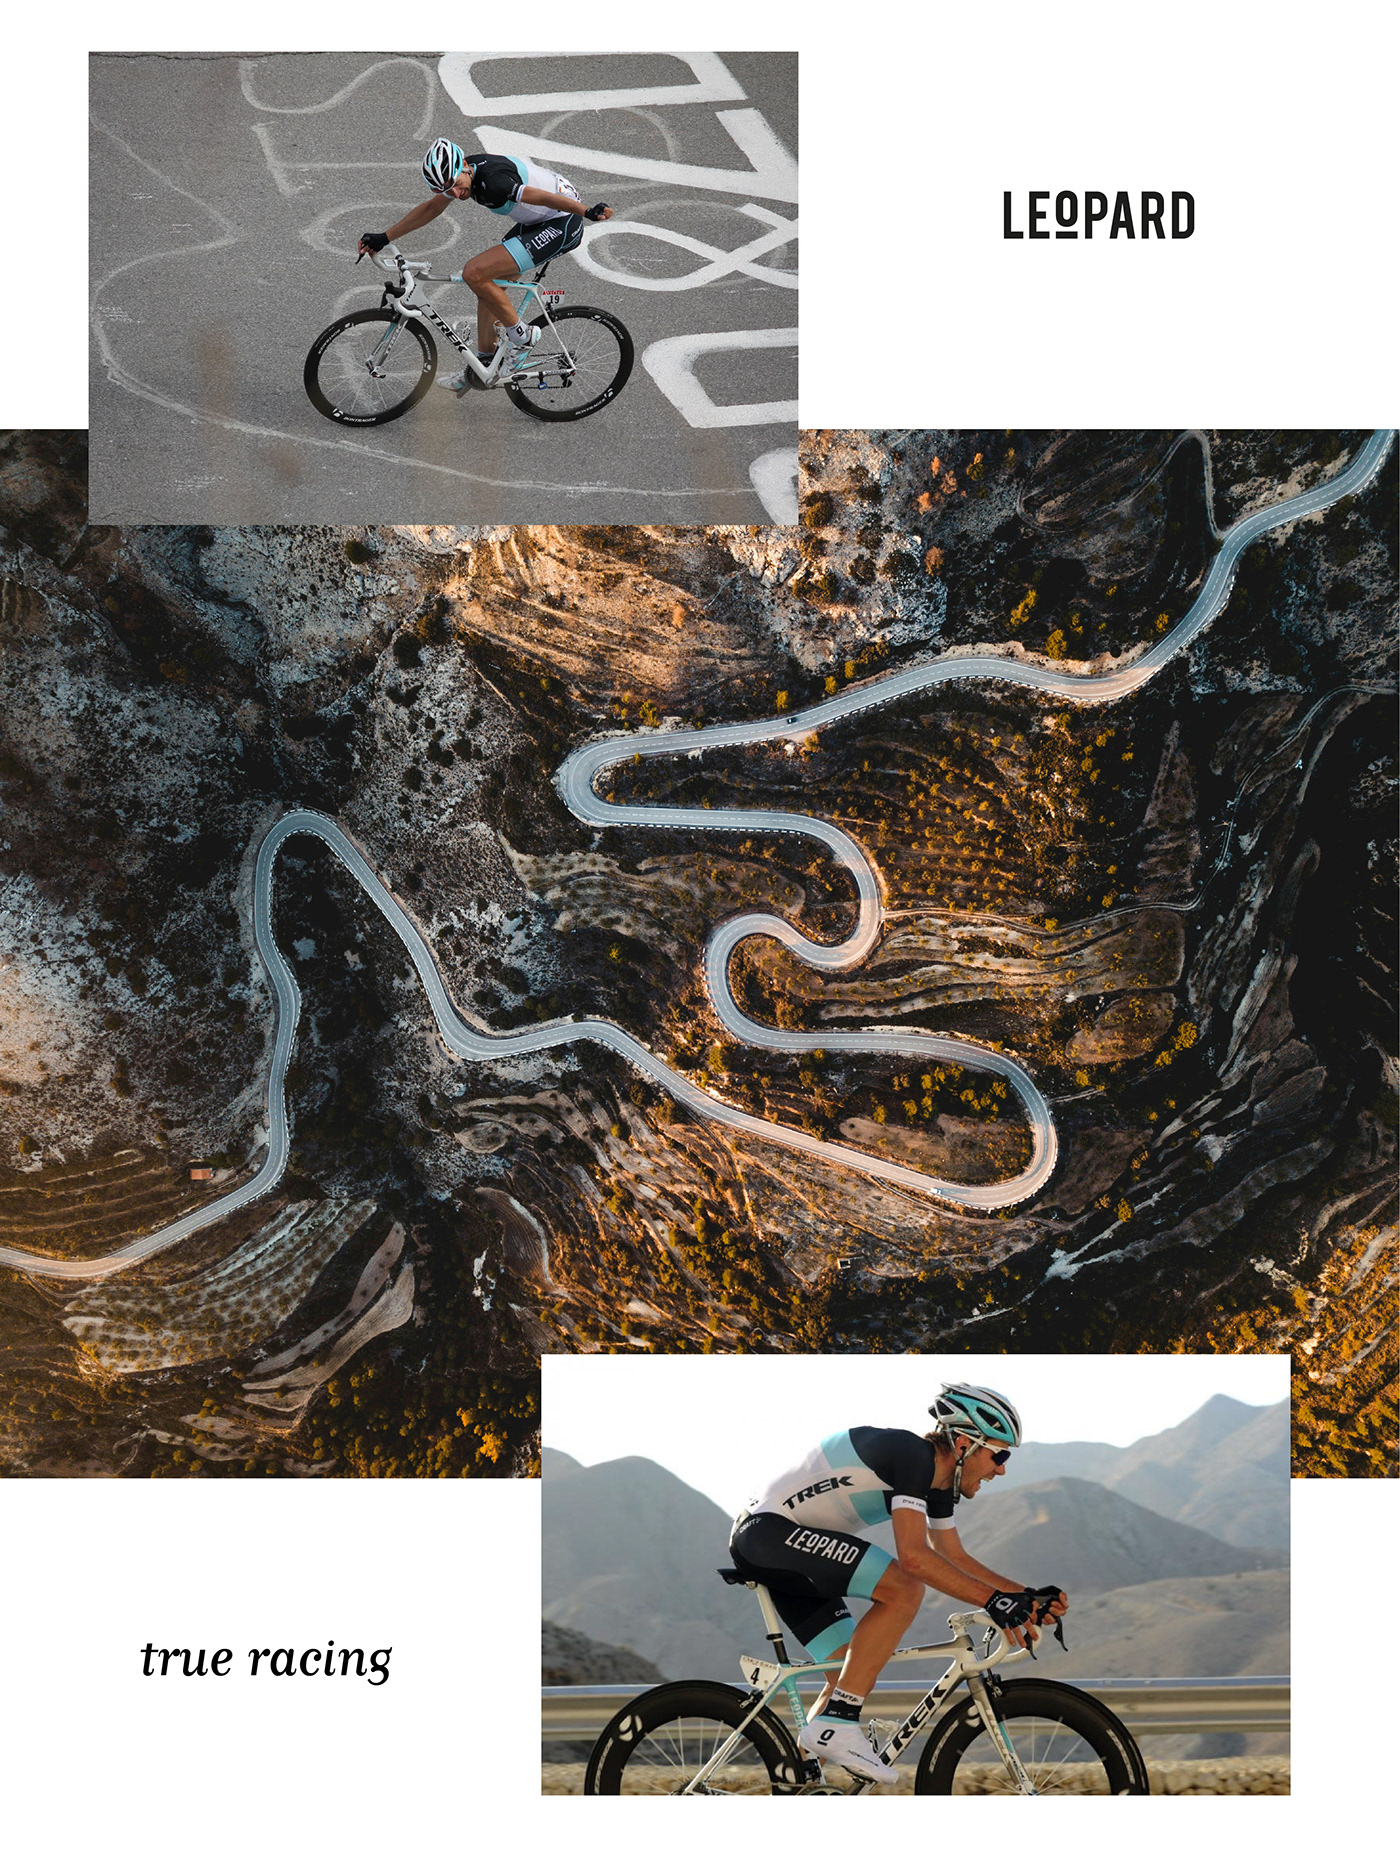 sport branding flo balaes Brand Design Tour de France Bike florence balaes Fabian cancelara leopard trek pro cycling jersey design radioshack nissan trek